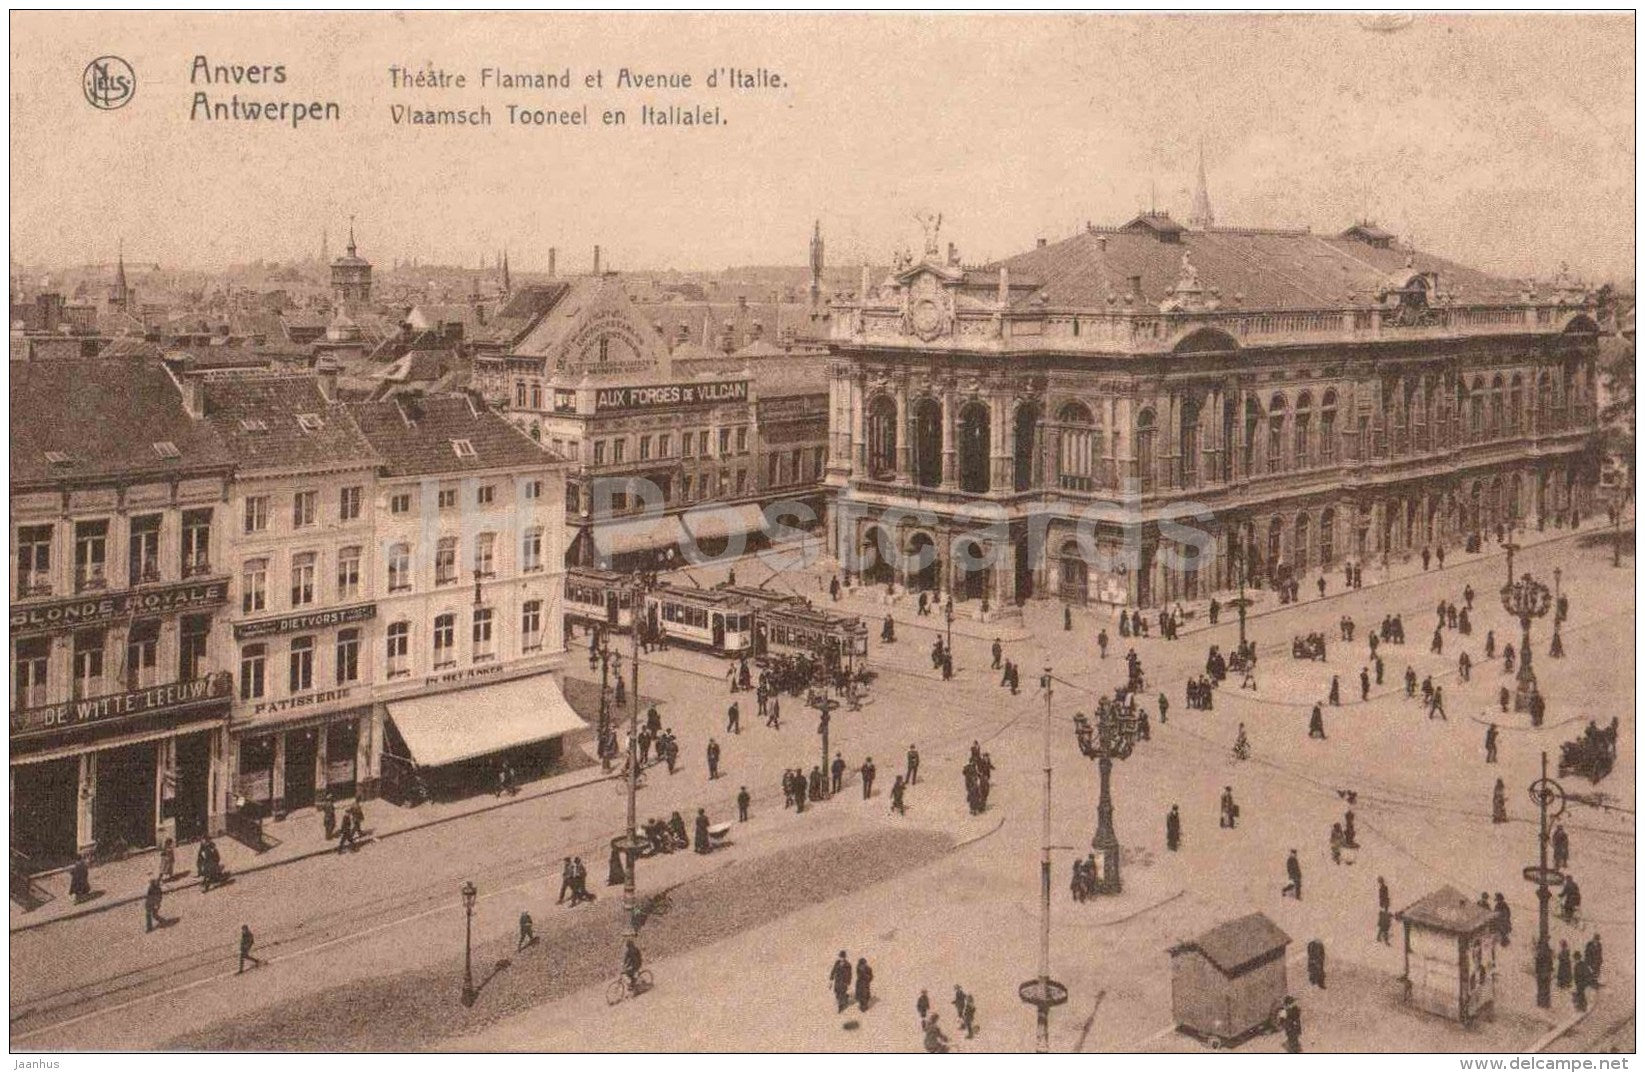 Theatre Flamand et Avenue d´Italie - tram - Anvers - Antwerpen - Belgium - old postcard - unused - JH Postcards